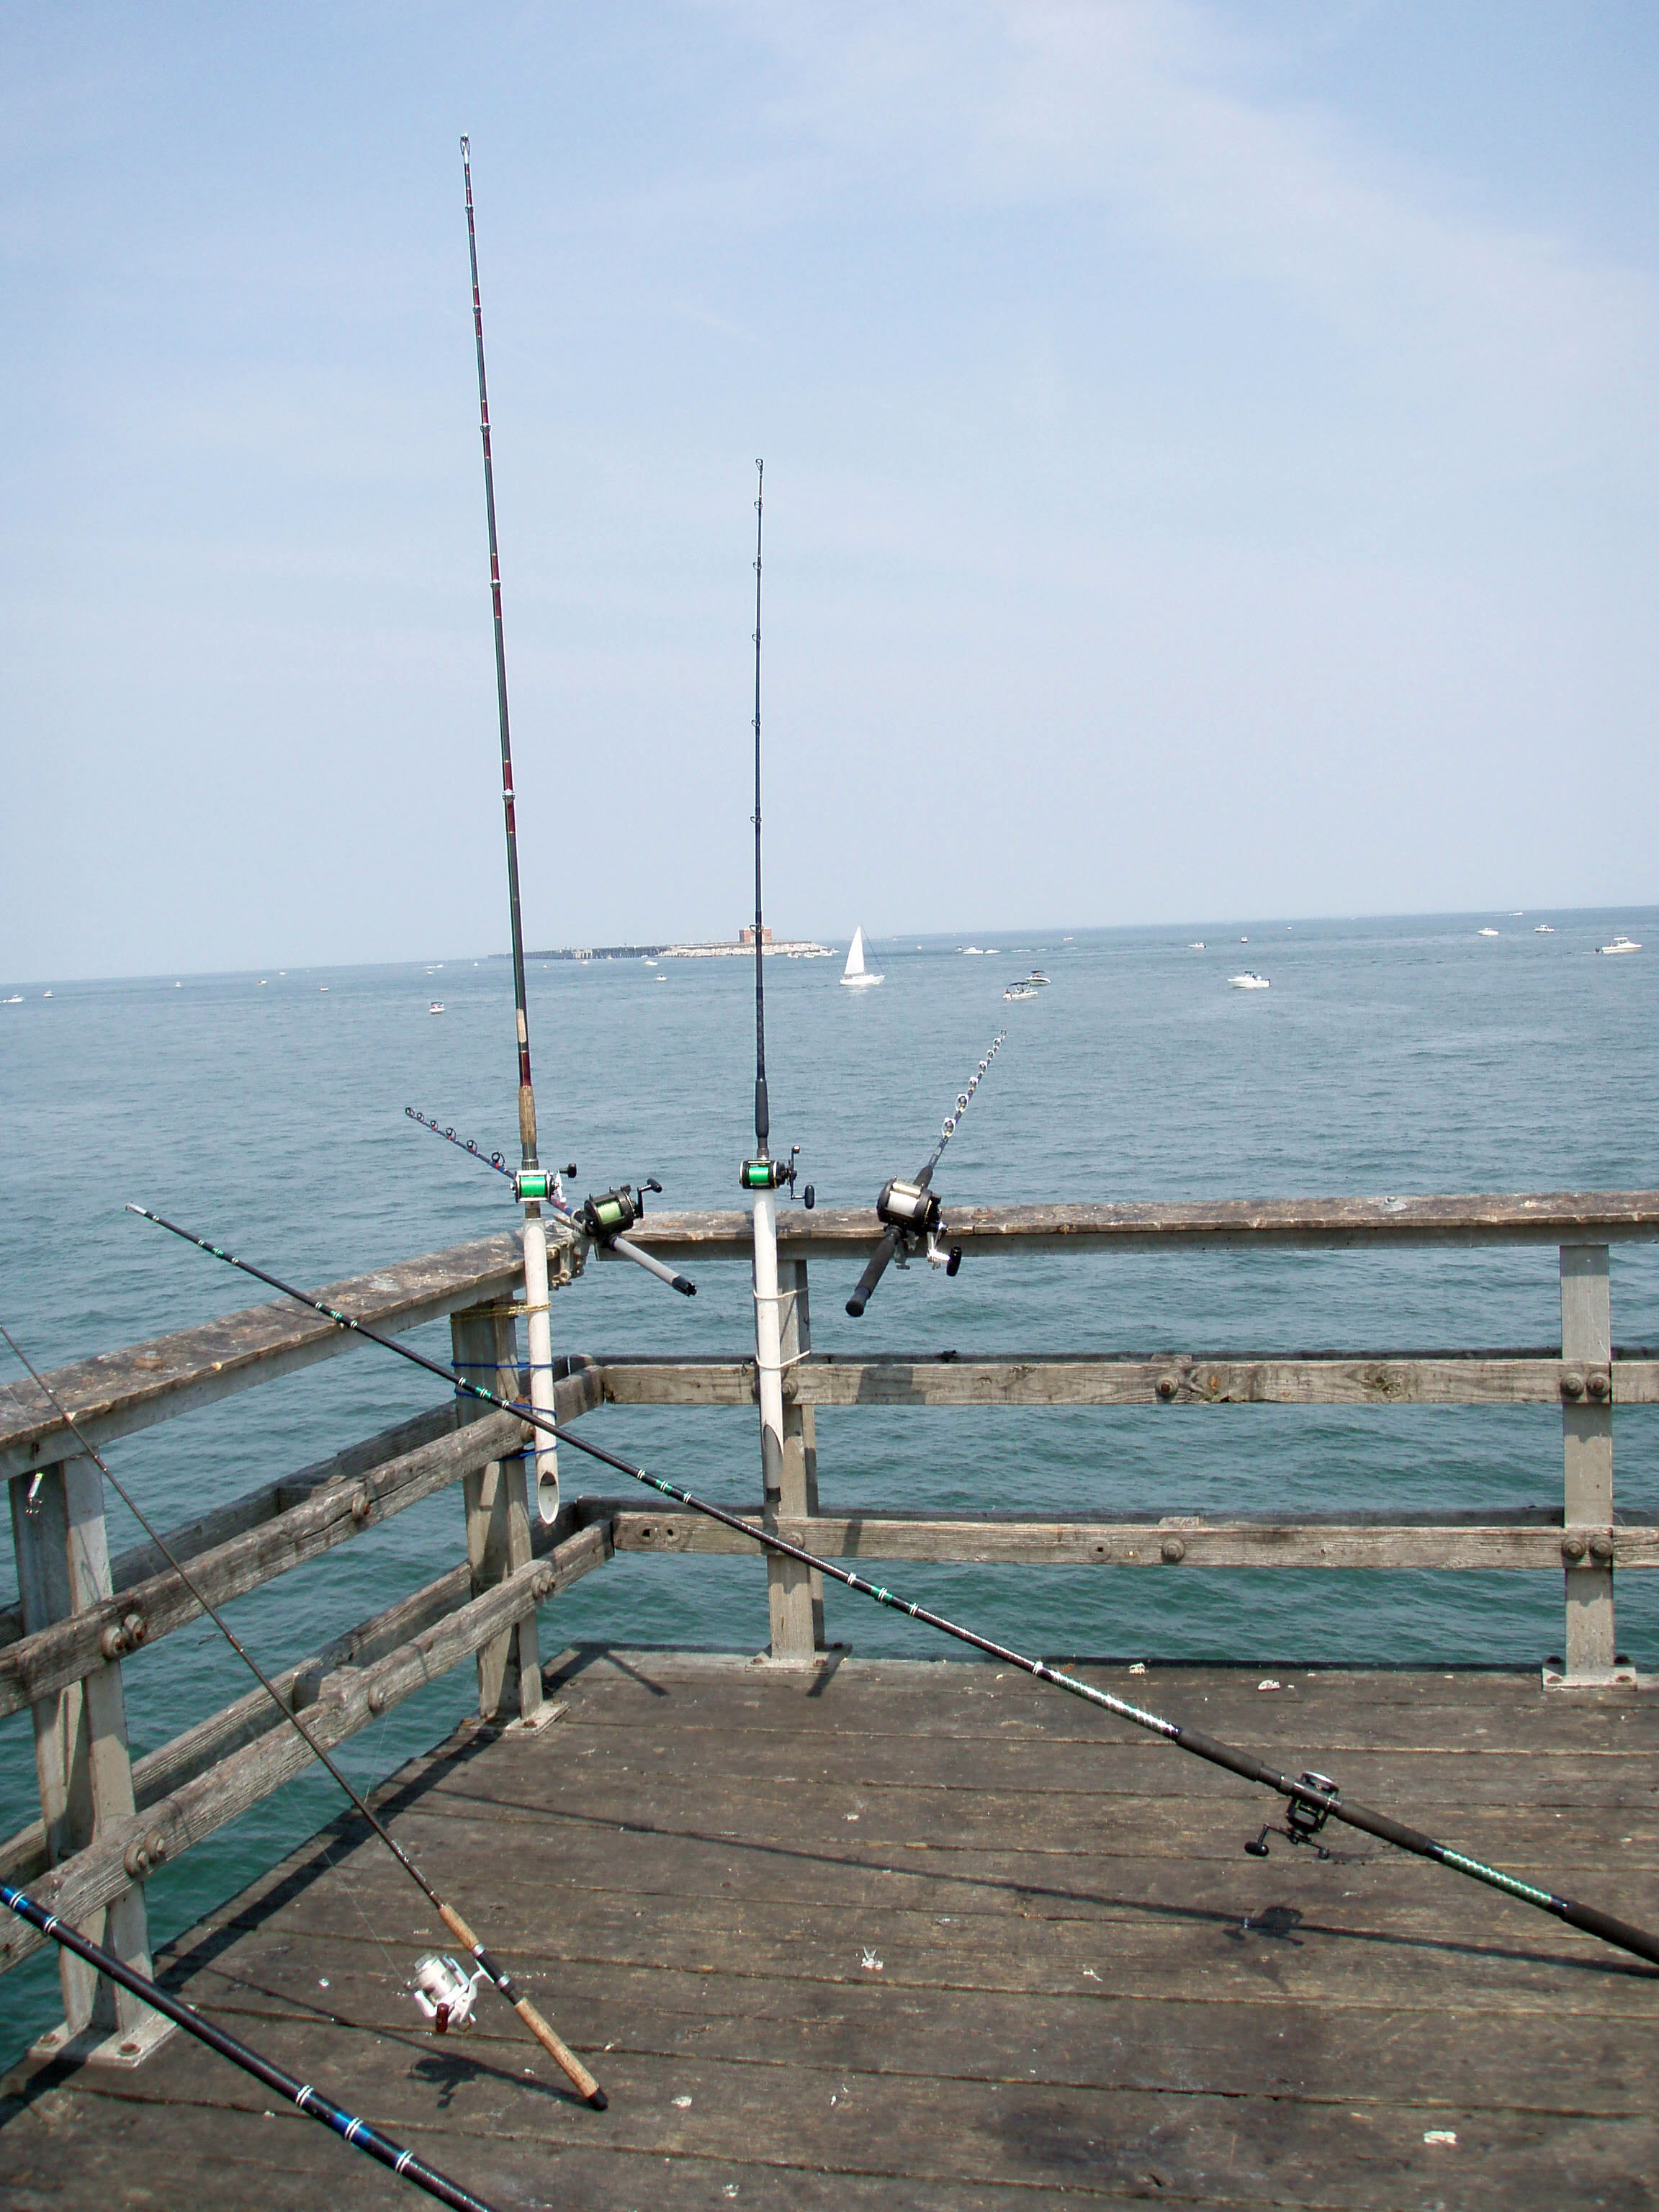 For Pier Fishing 